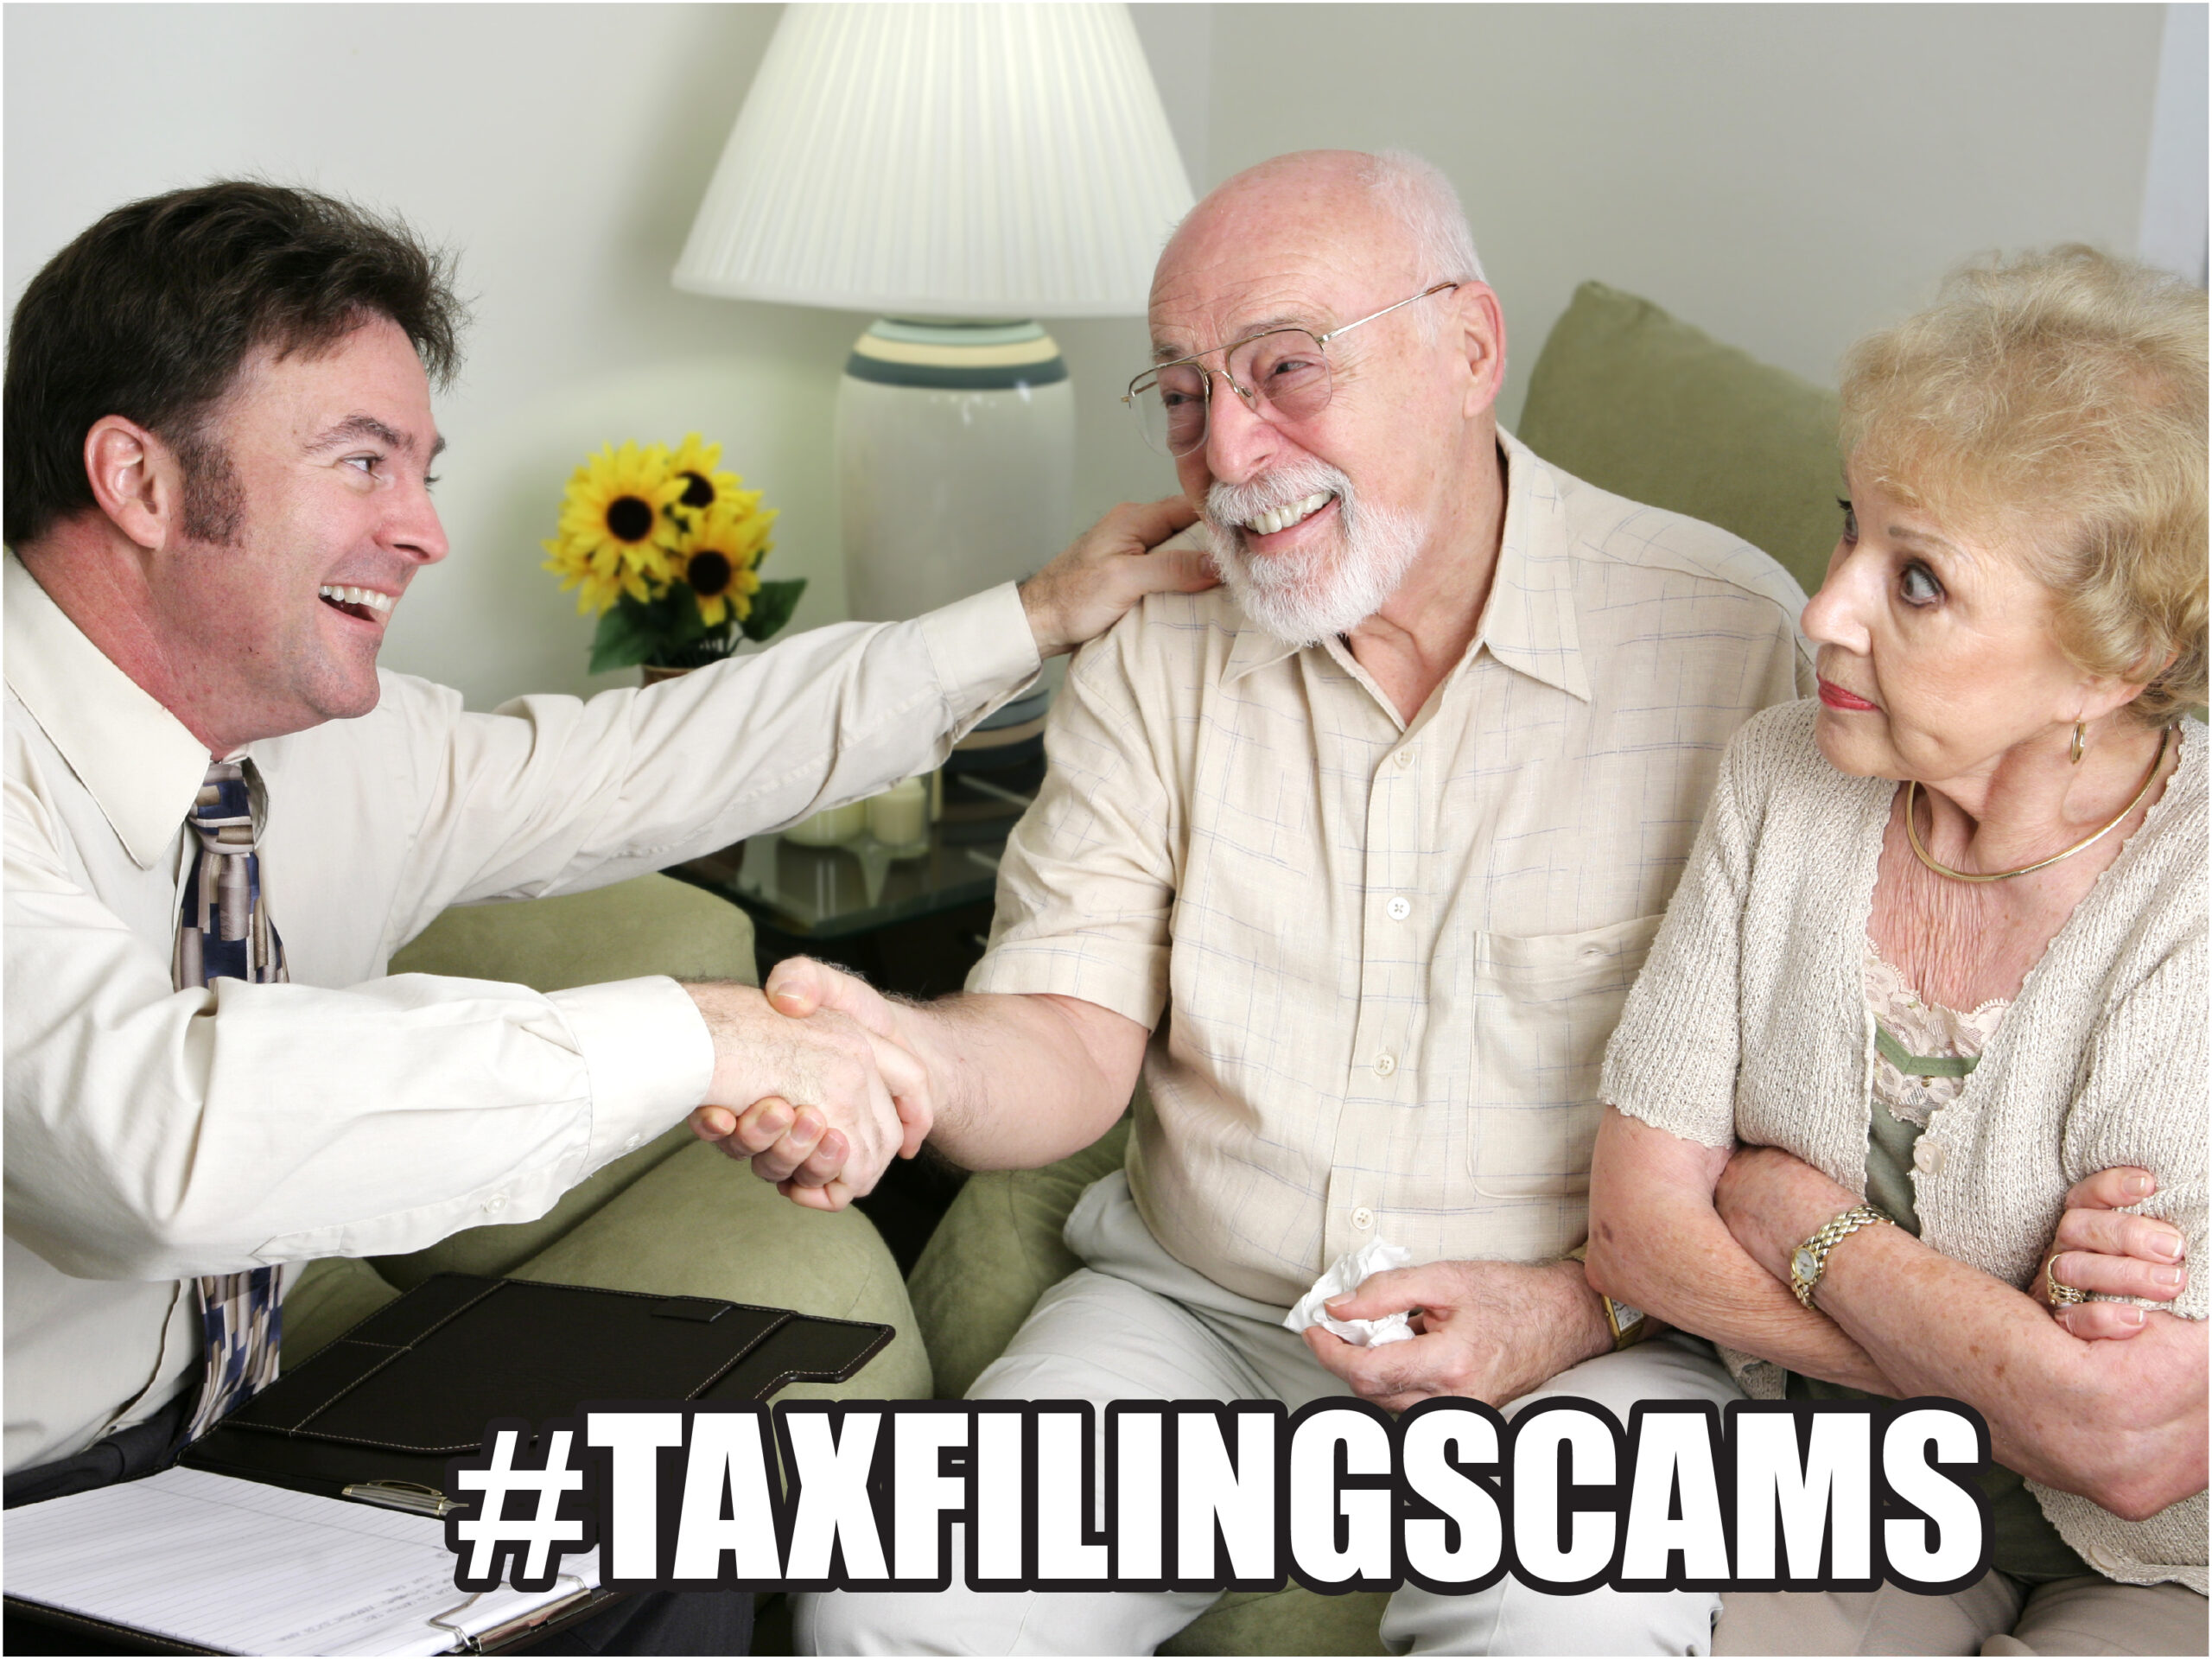 tax scam